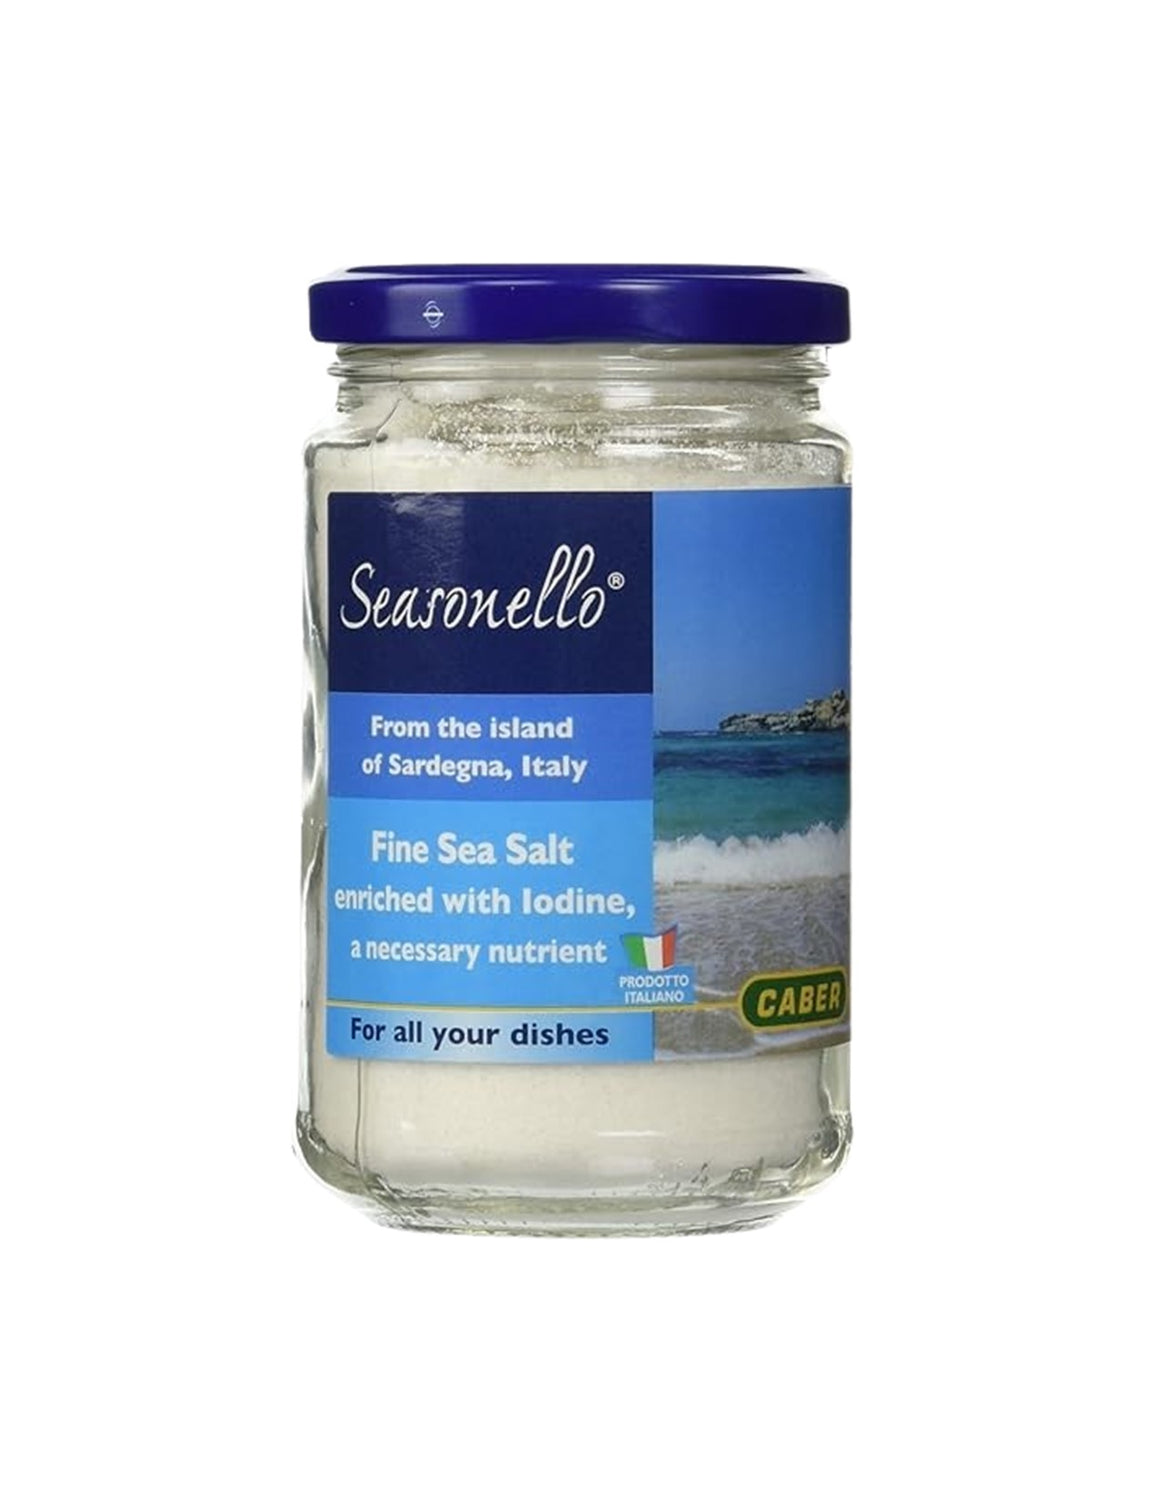 Seasonello Sardegna Iodized Fine Sea Salt